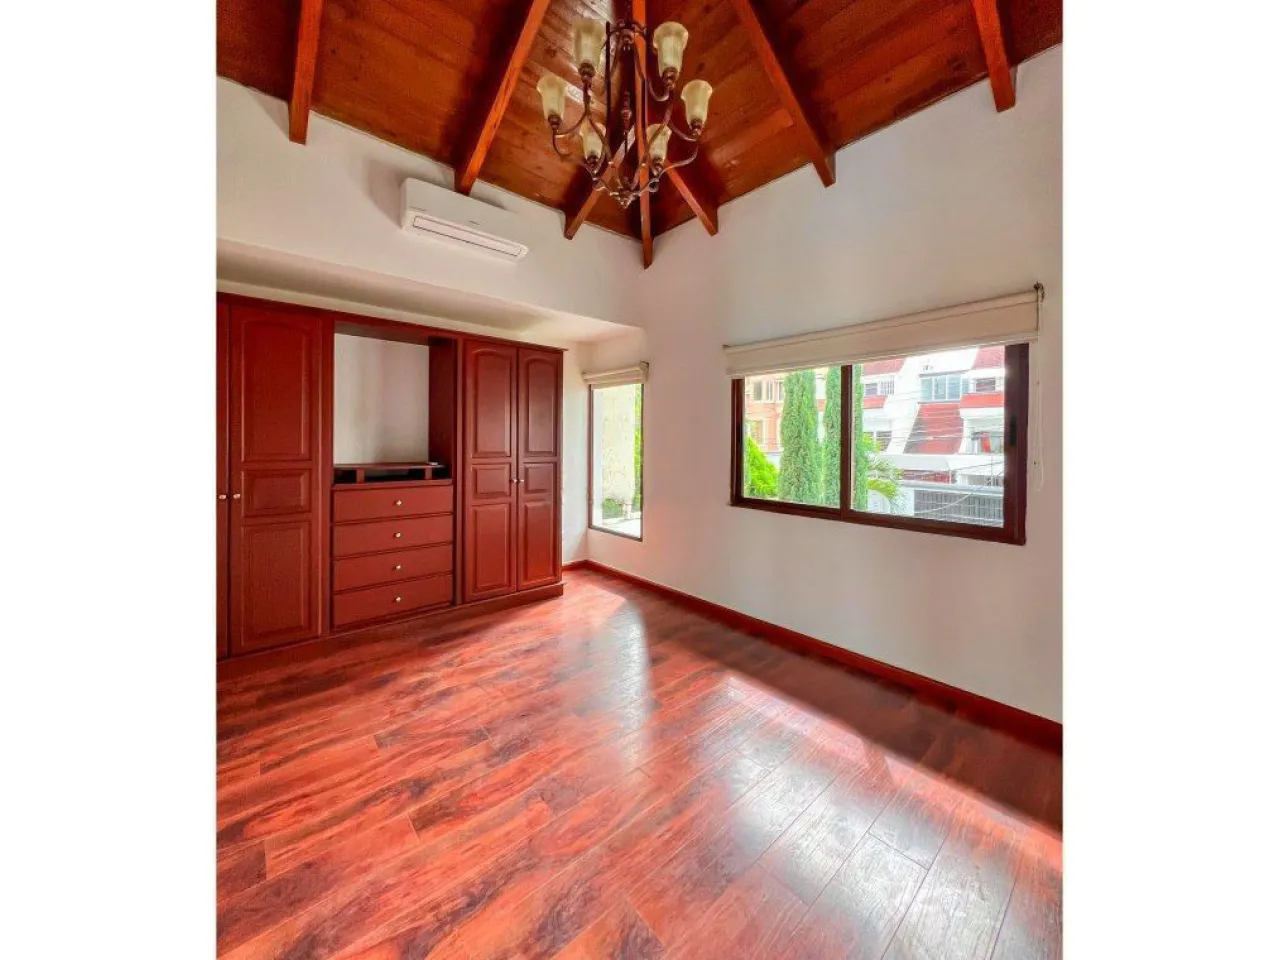 Habitación con closet de madera, un aire acondicionado, techo de madera con un abanico aéreo.